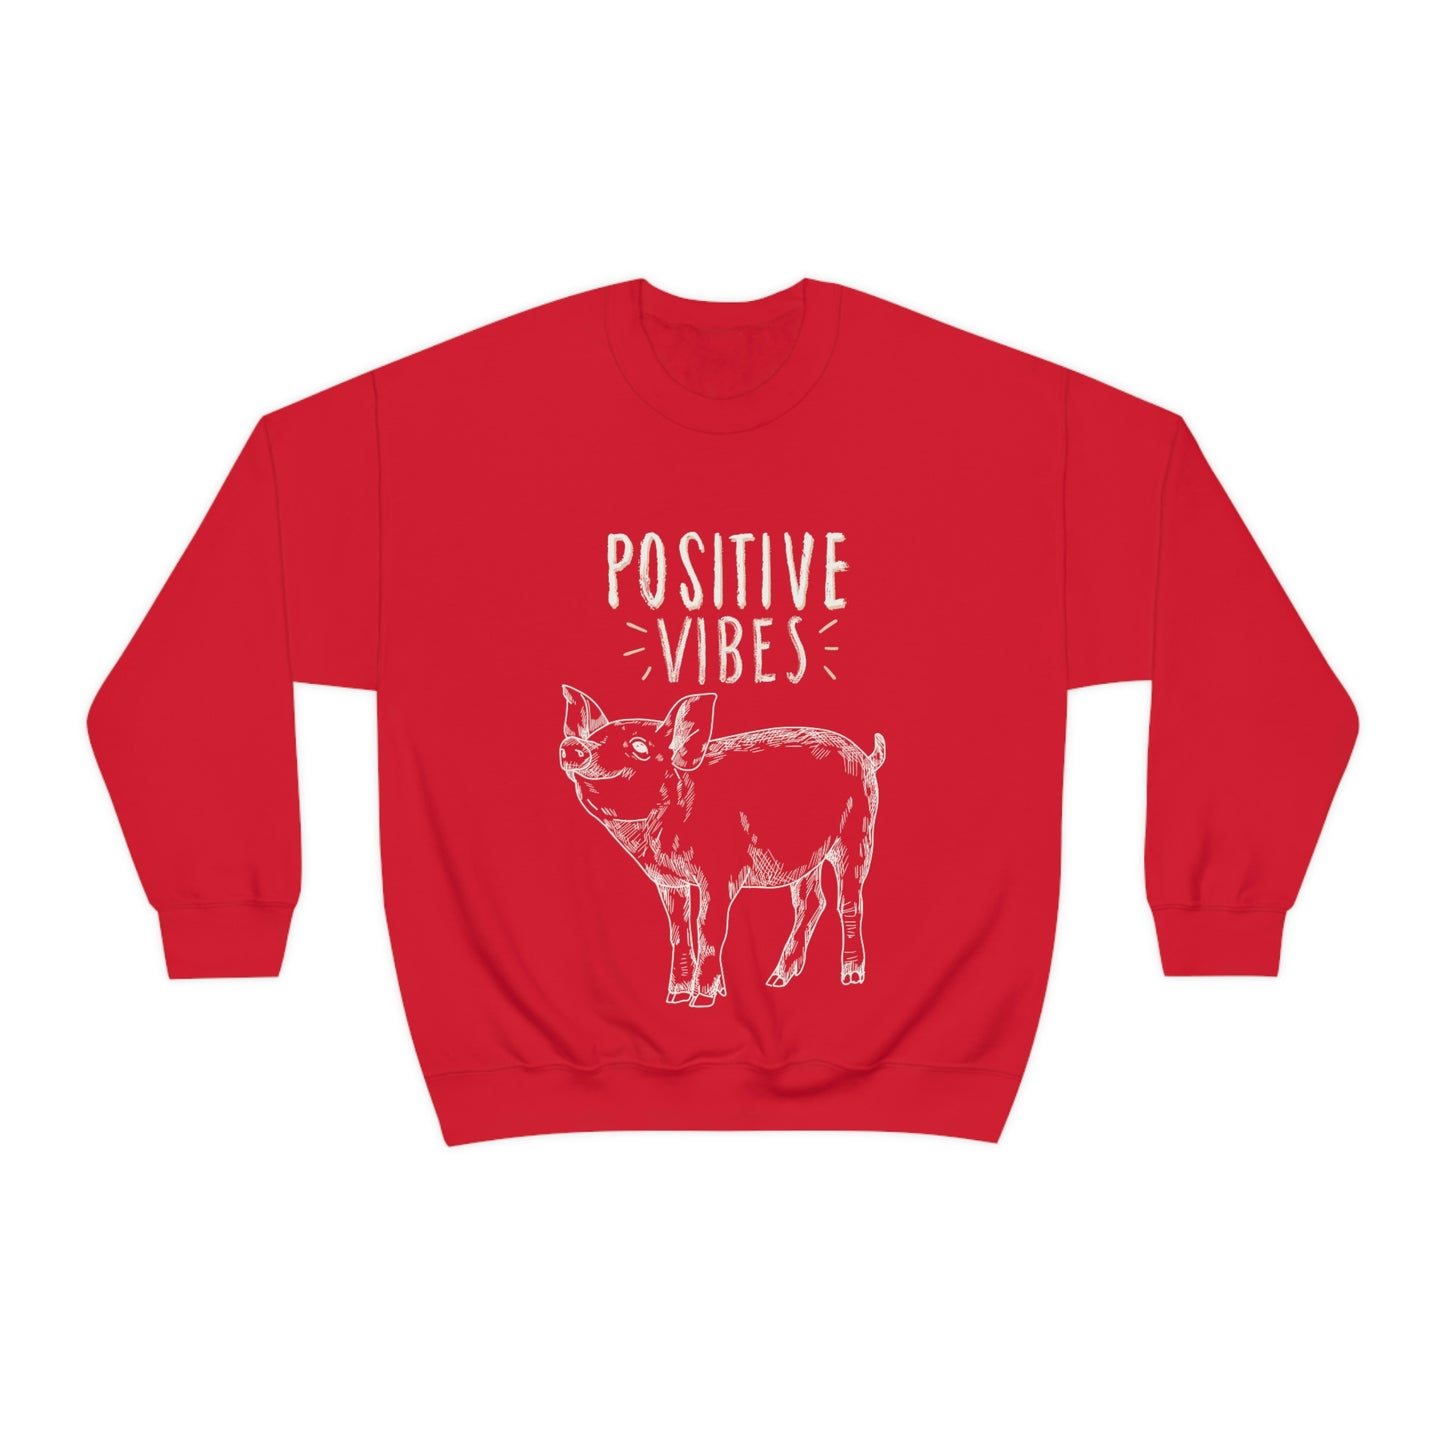 "Positive Vibes" logo with Cute PIG Graphic Crewneck Sweatshirt